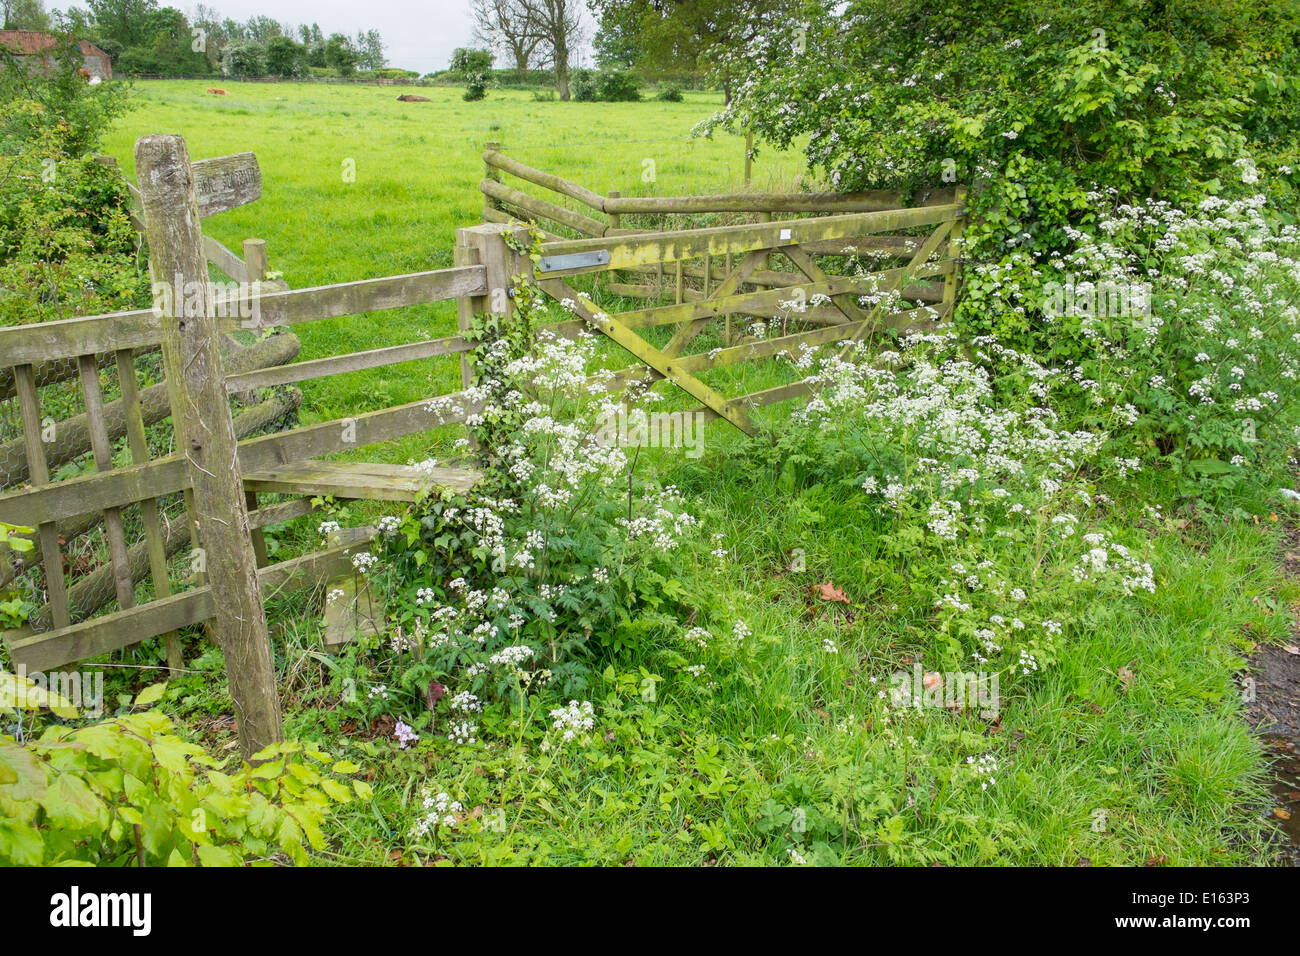 Farm gate , stile and 'public footpath' sign, Norfolk, England Stock Photo